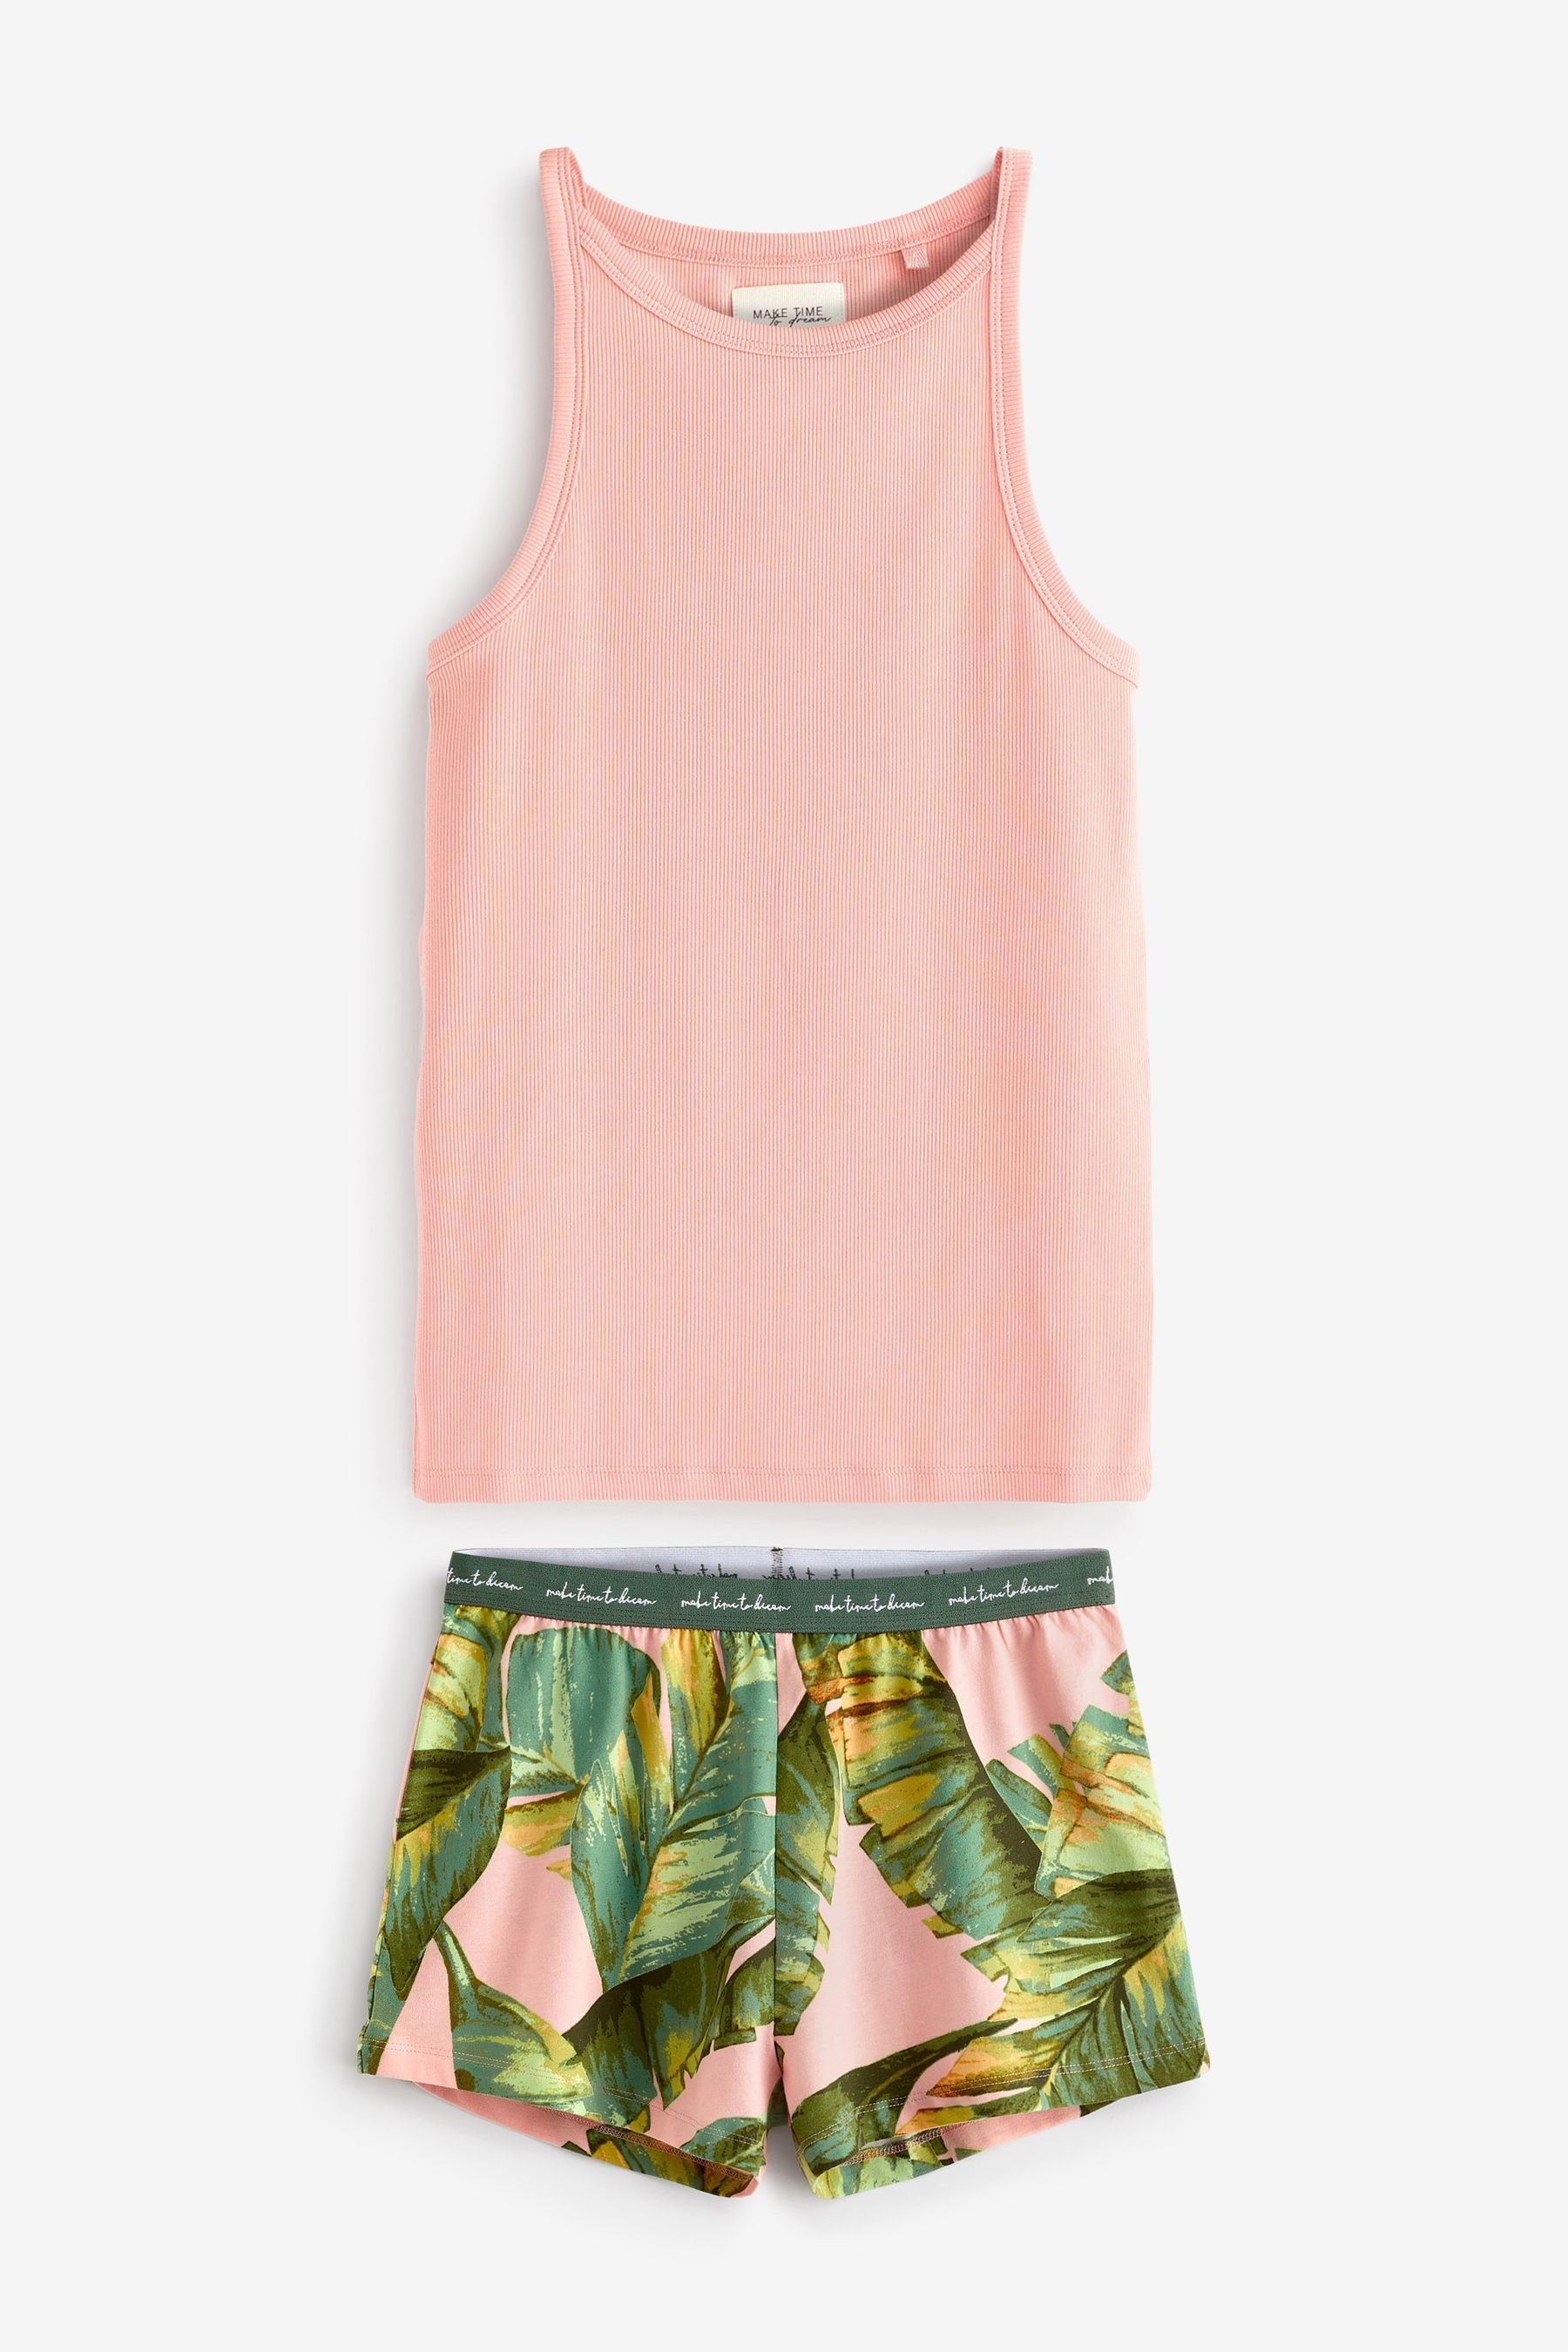 Next Pyjama Schlafanzug mit Ripp-Trägertop und Shorts, Petite (2 tlg) Pink Palm